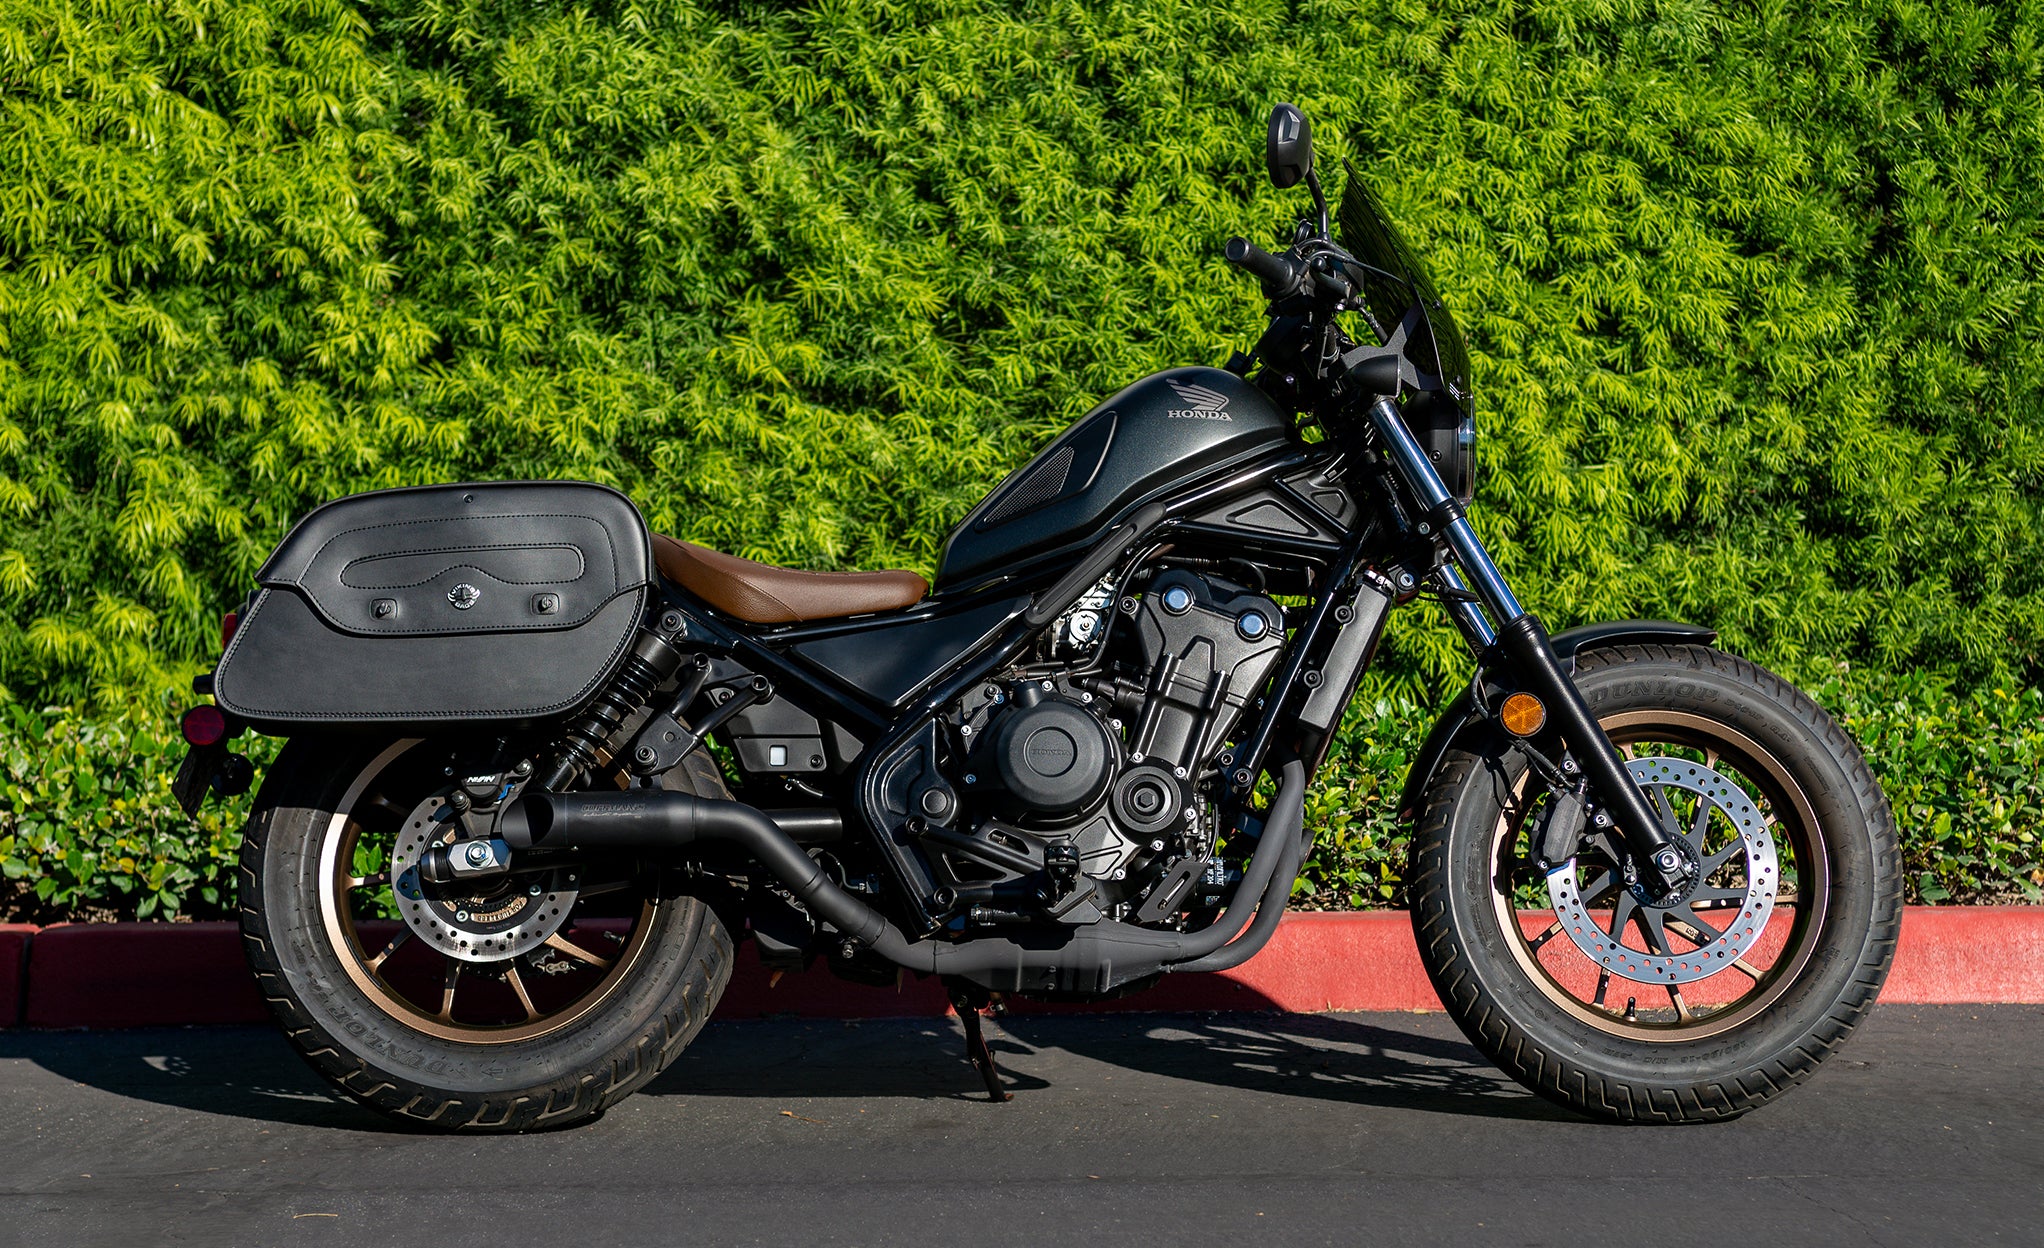 Viking Warrior Large Honda Rebel 300 Shock Cut Out Leather Motorcycle Saddlebags @expand